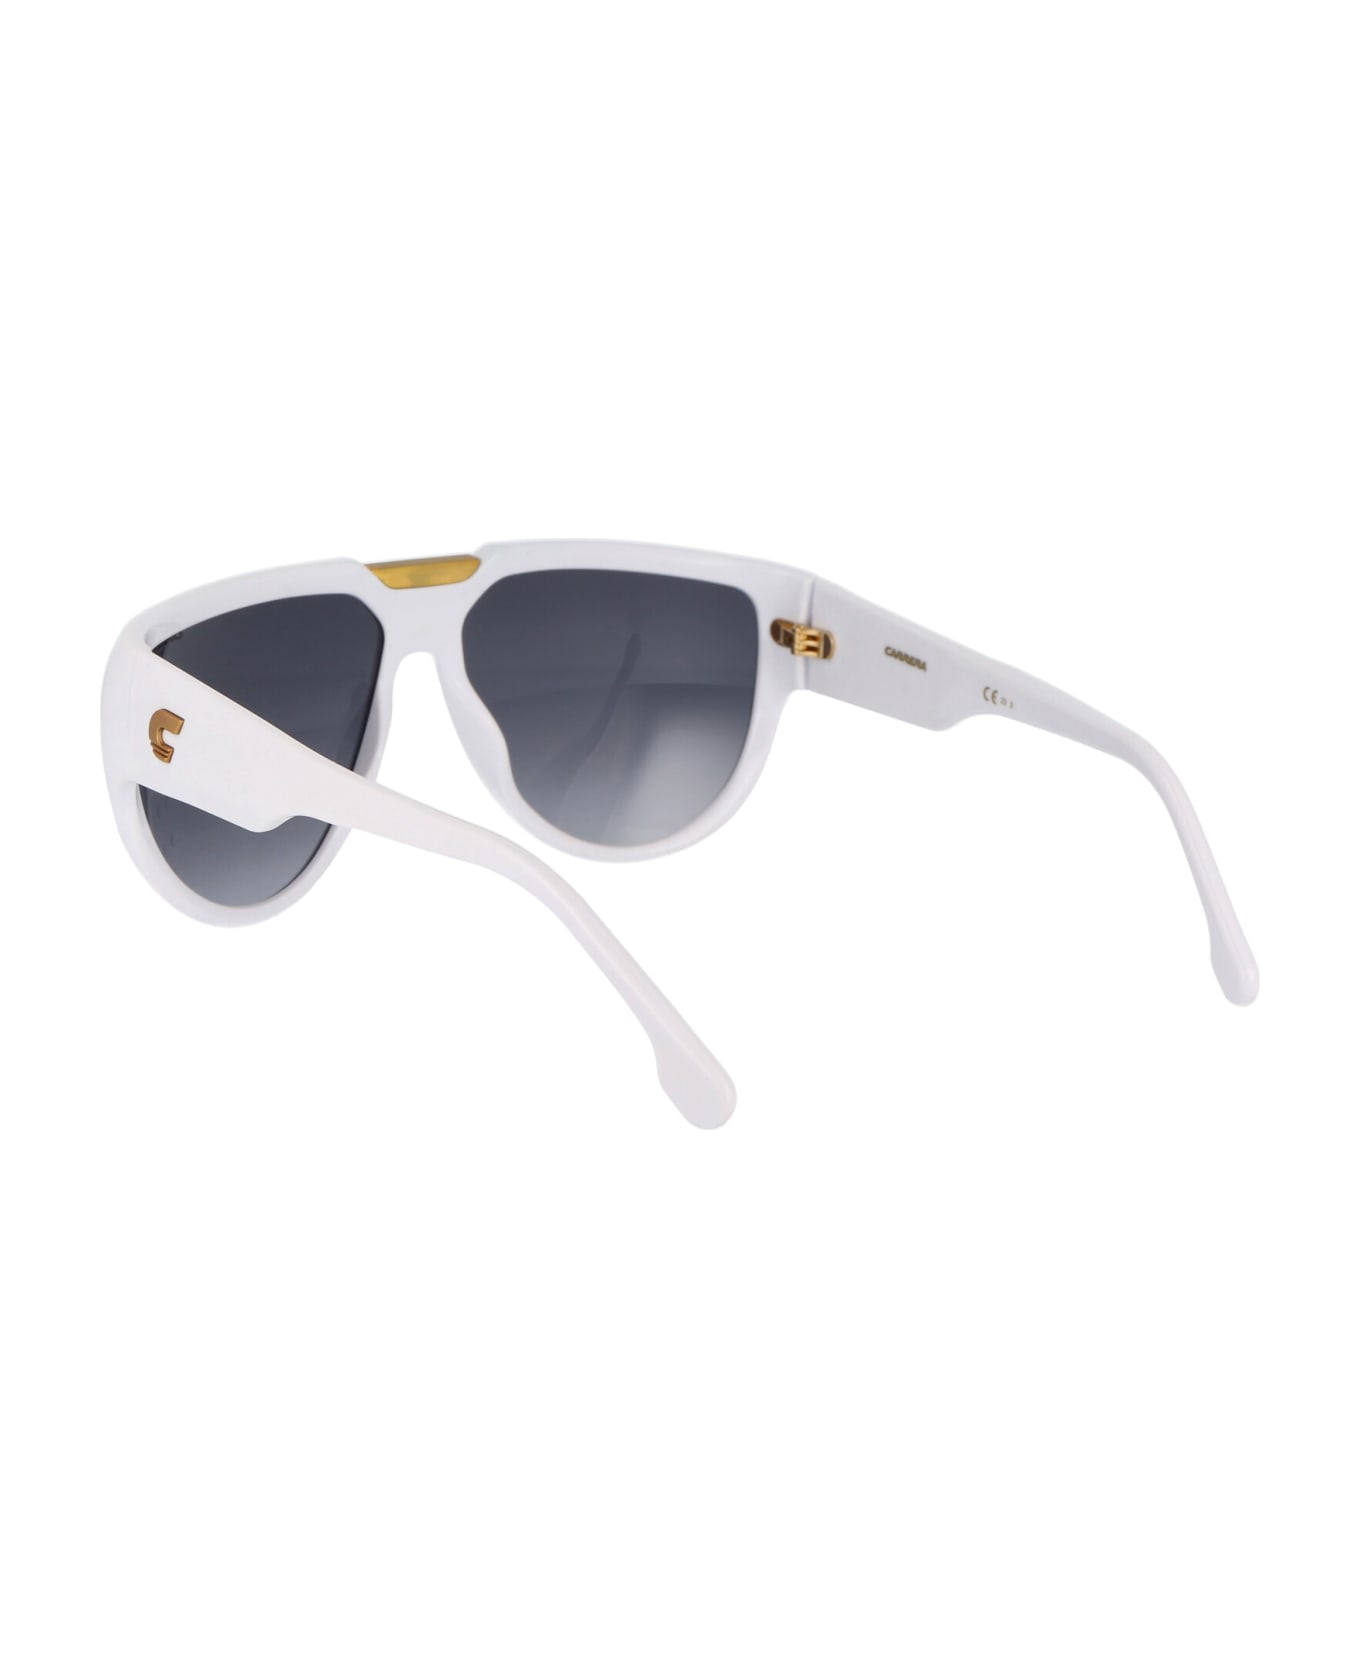 Carrera Flaglab 13 Sunglasses - VK69O BIANCO サングラス